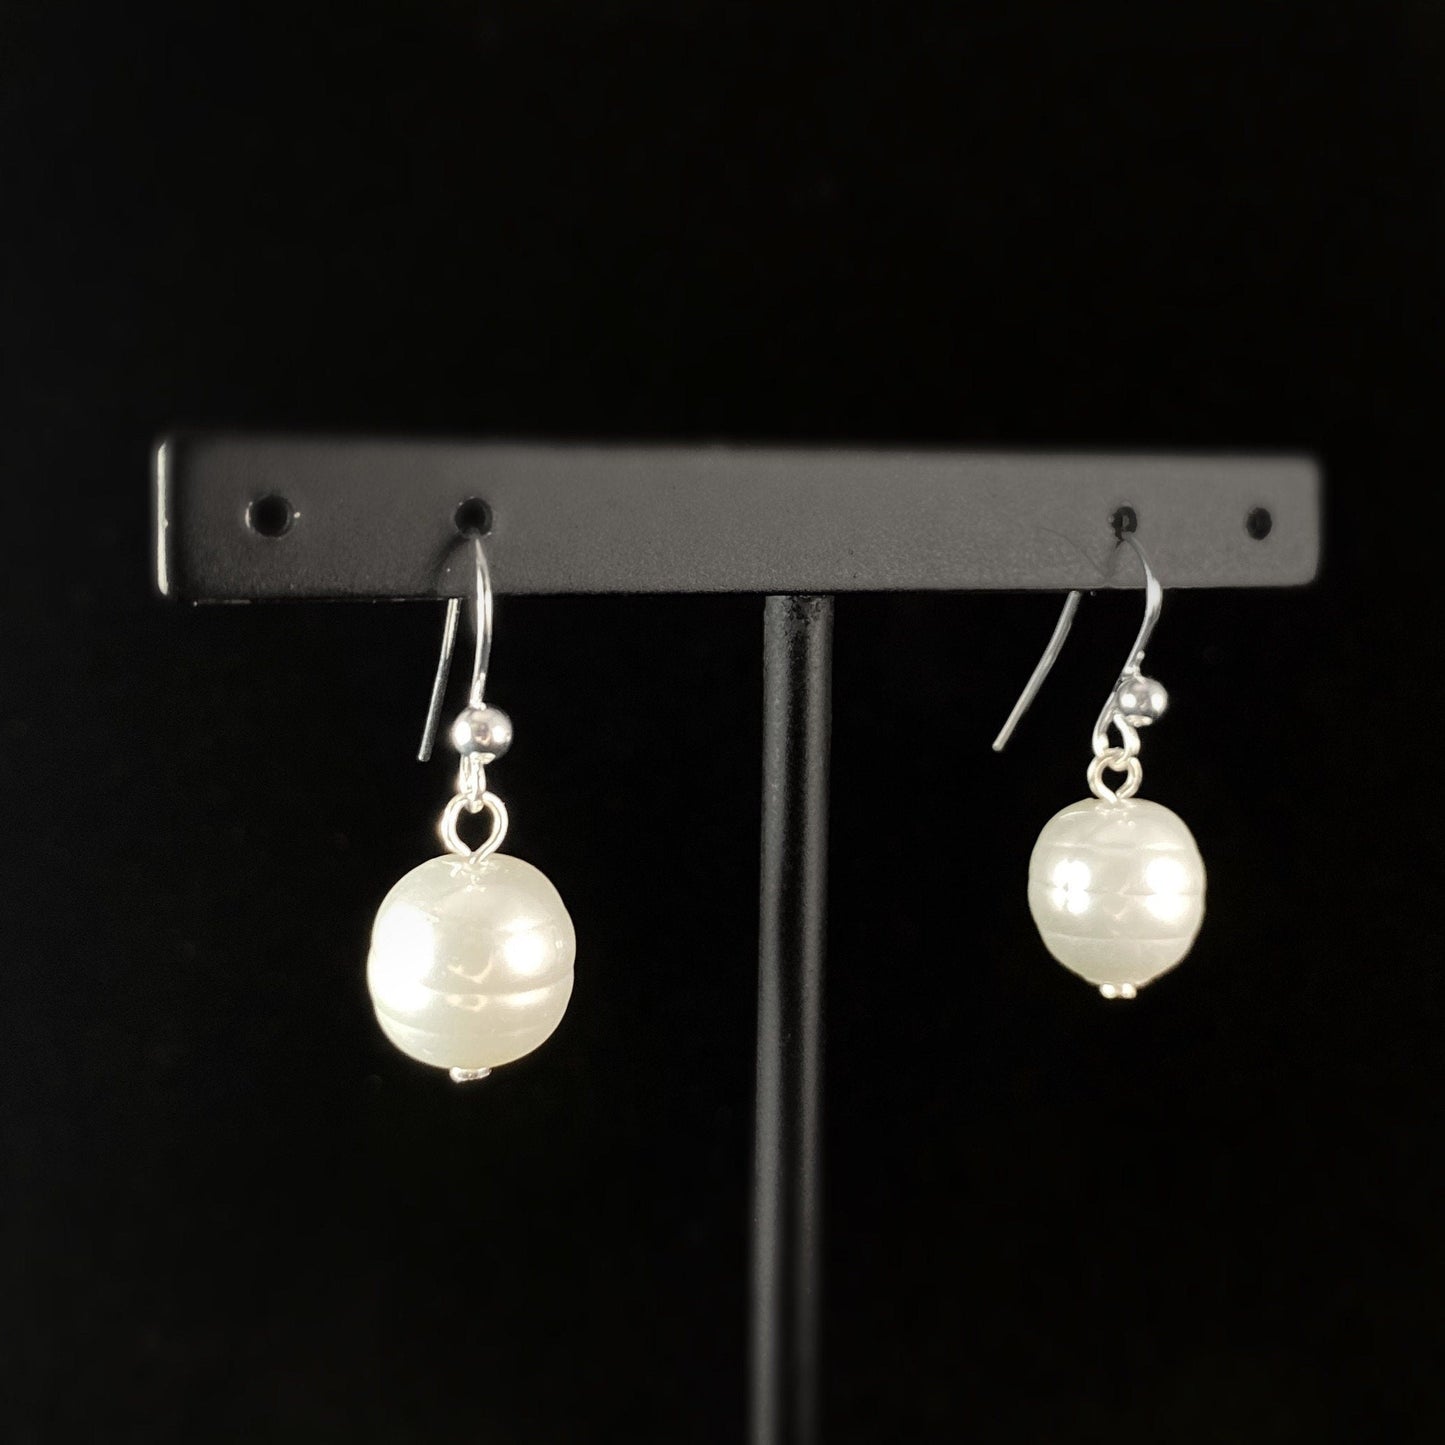 Dainty Minimalist White Pearl Earrings - Handmade Nickel Free Ulla Jewelry